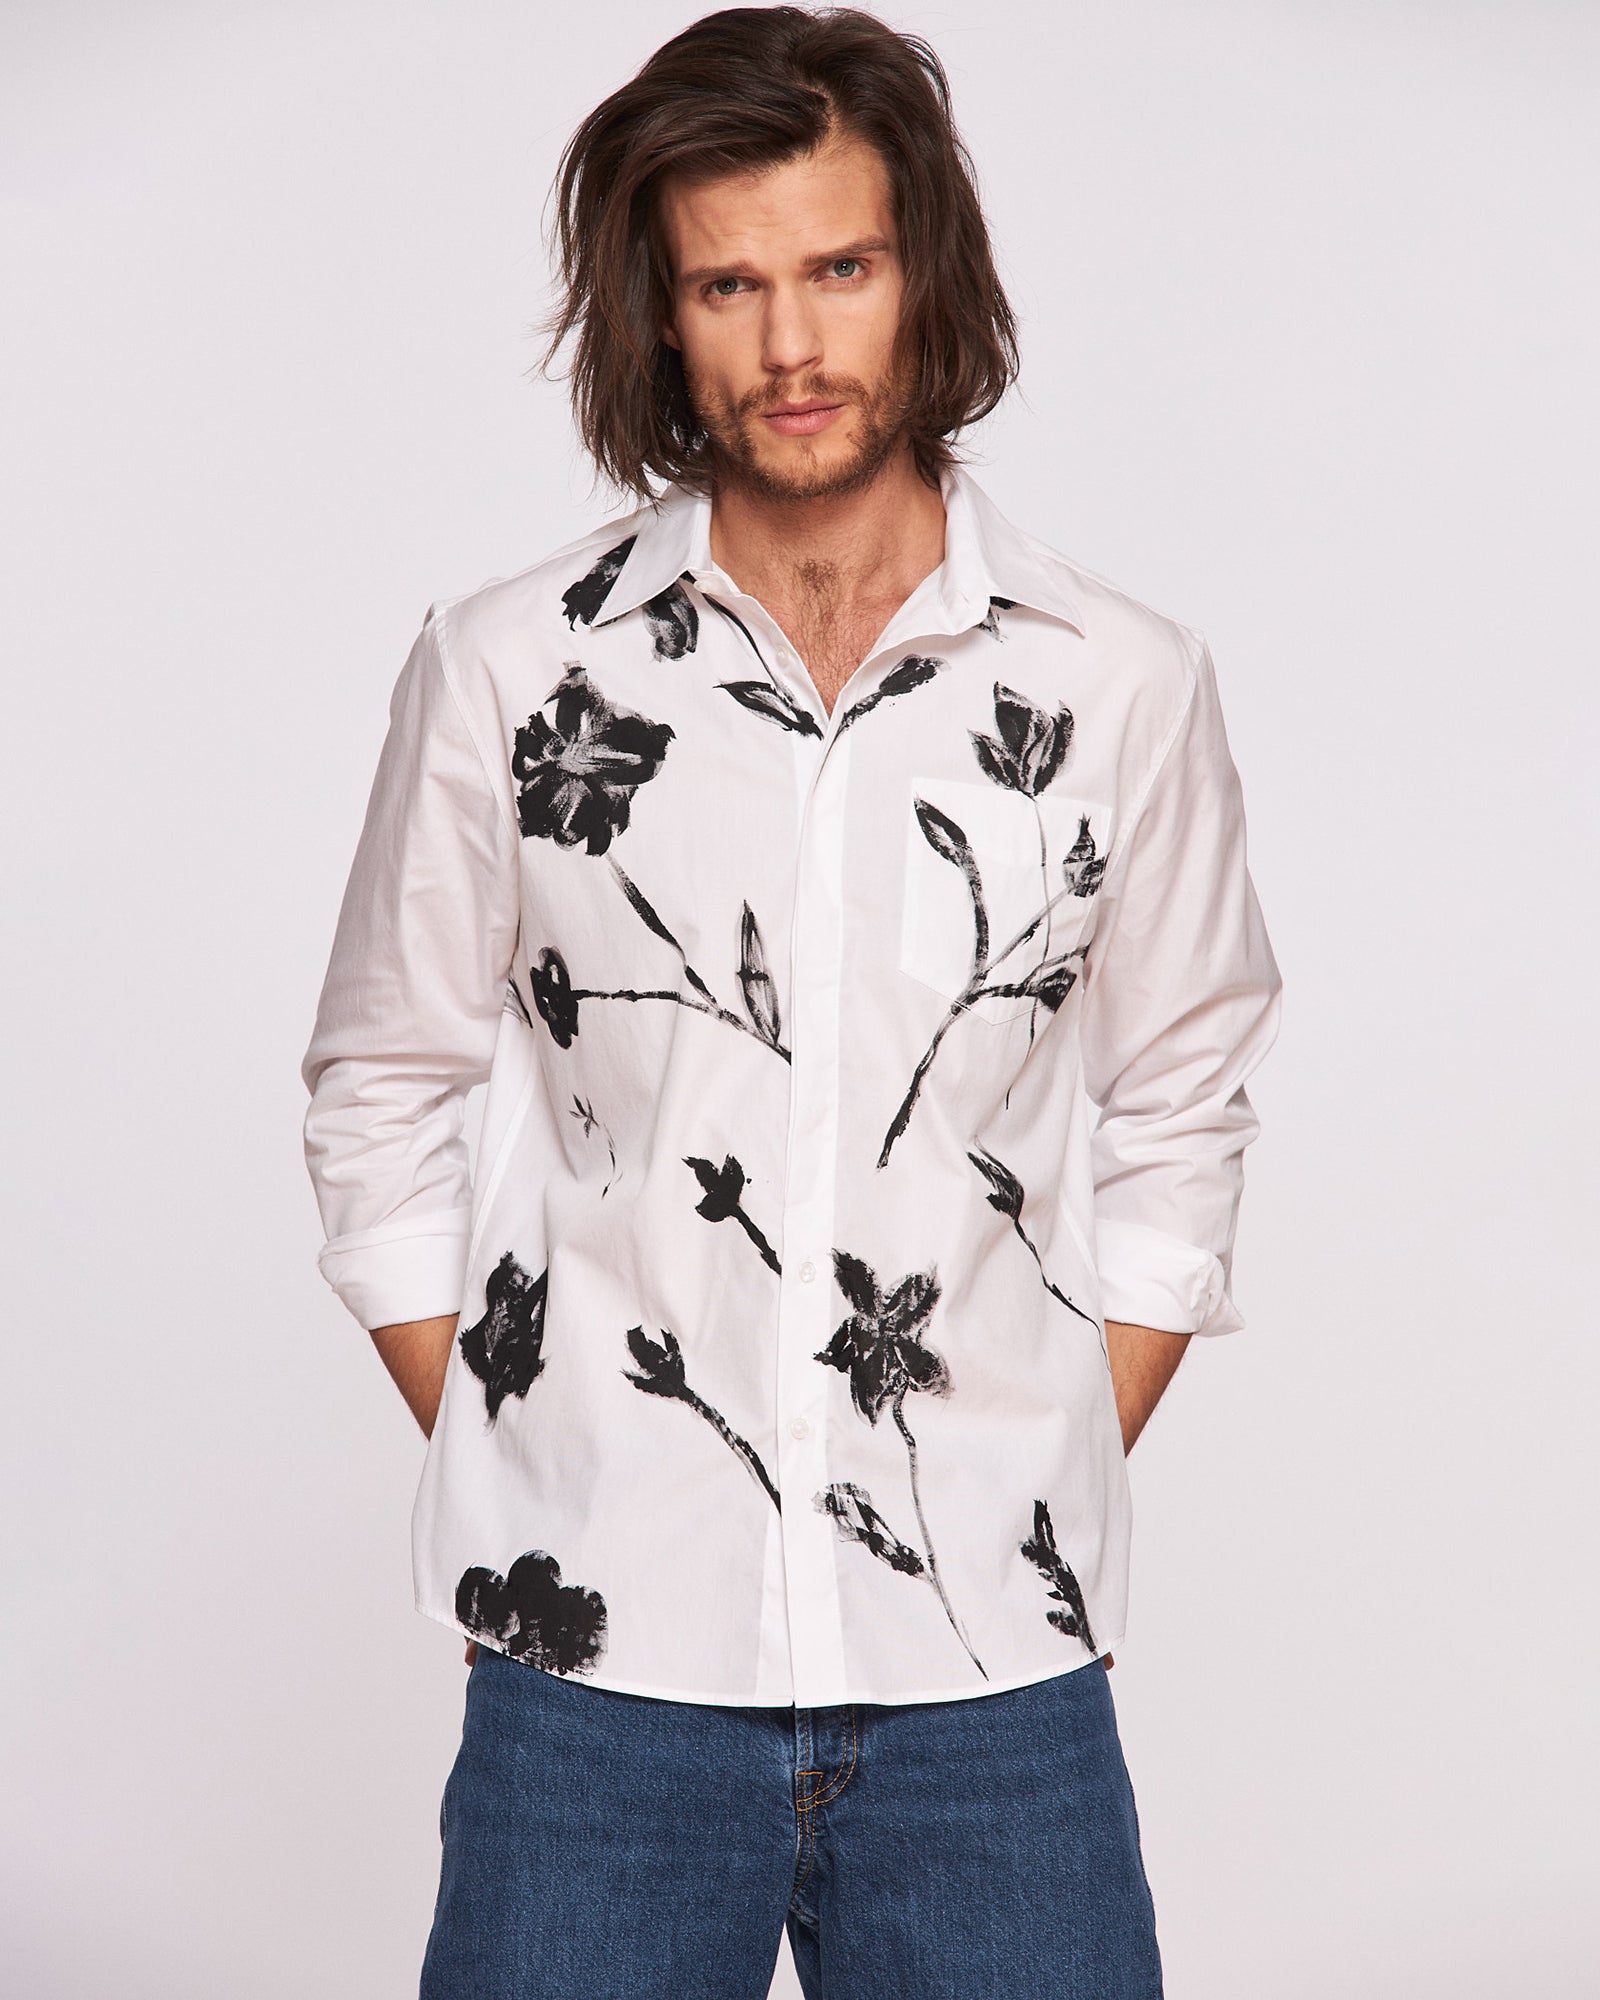 Hand-painted men's shirt "Monochrome flowers"